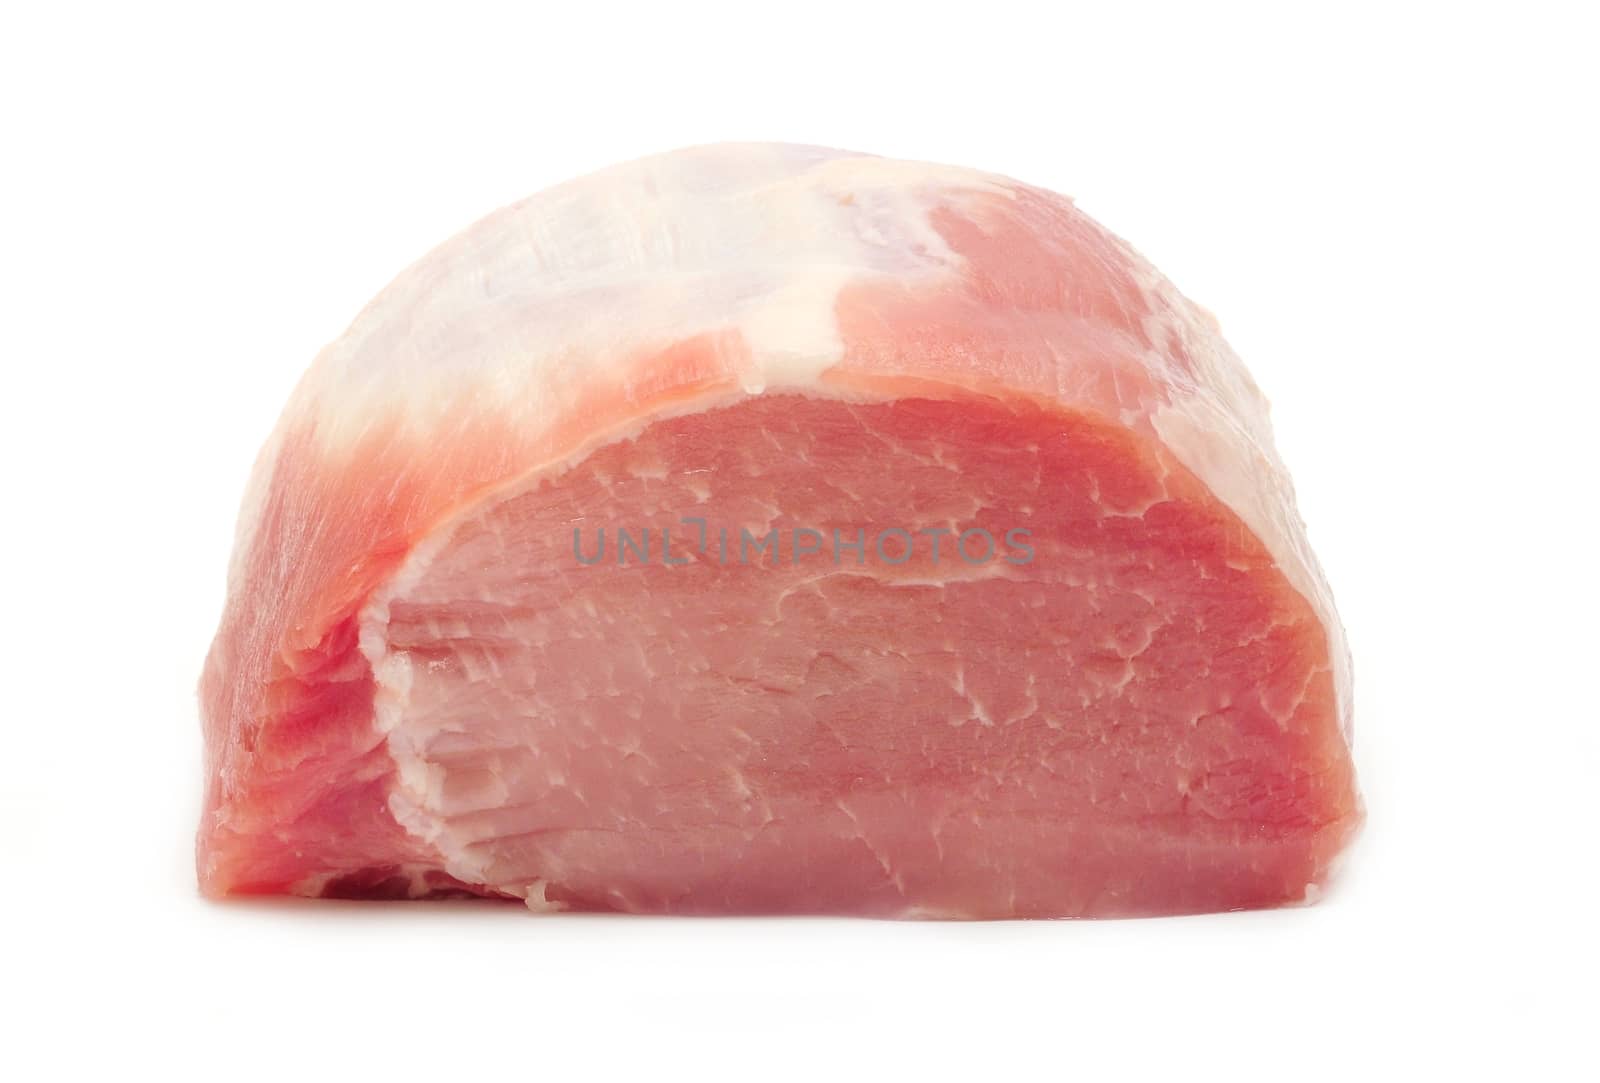 Raw pork loin by hamik